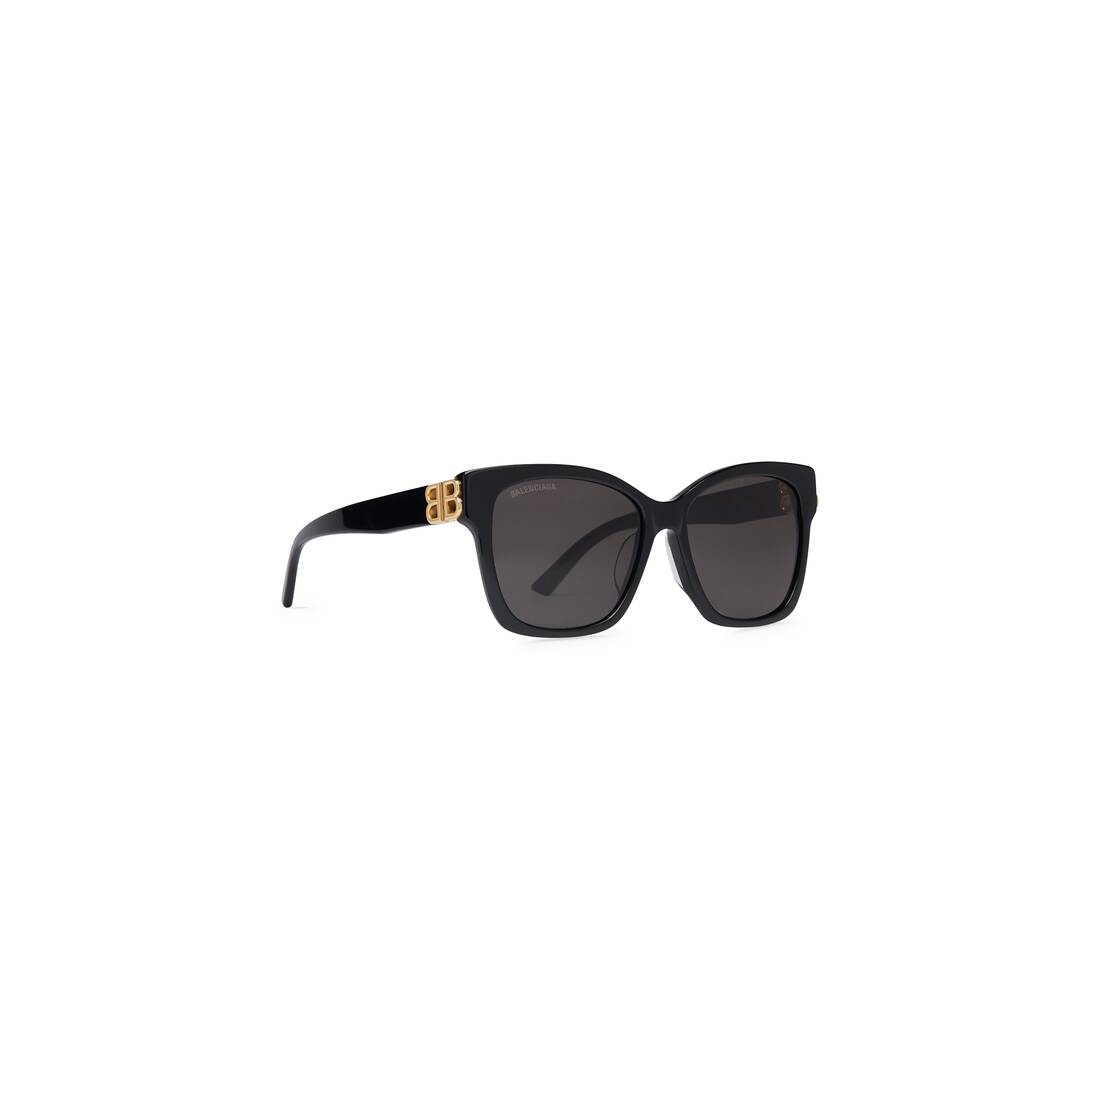 Women's Dynasty Square Sunglasses in Black - 2